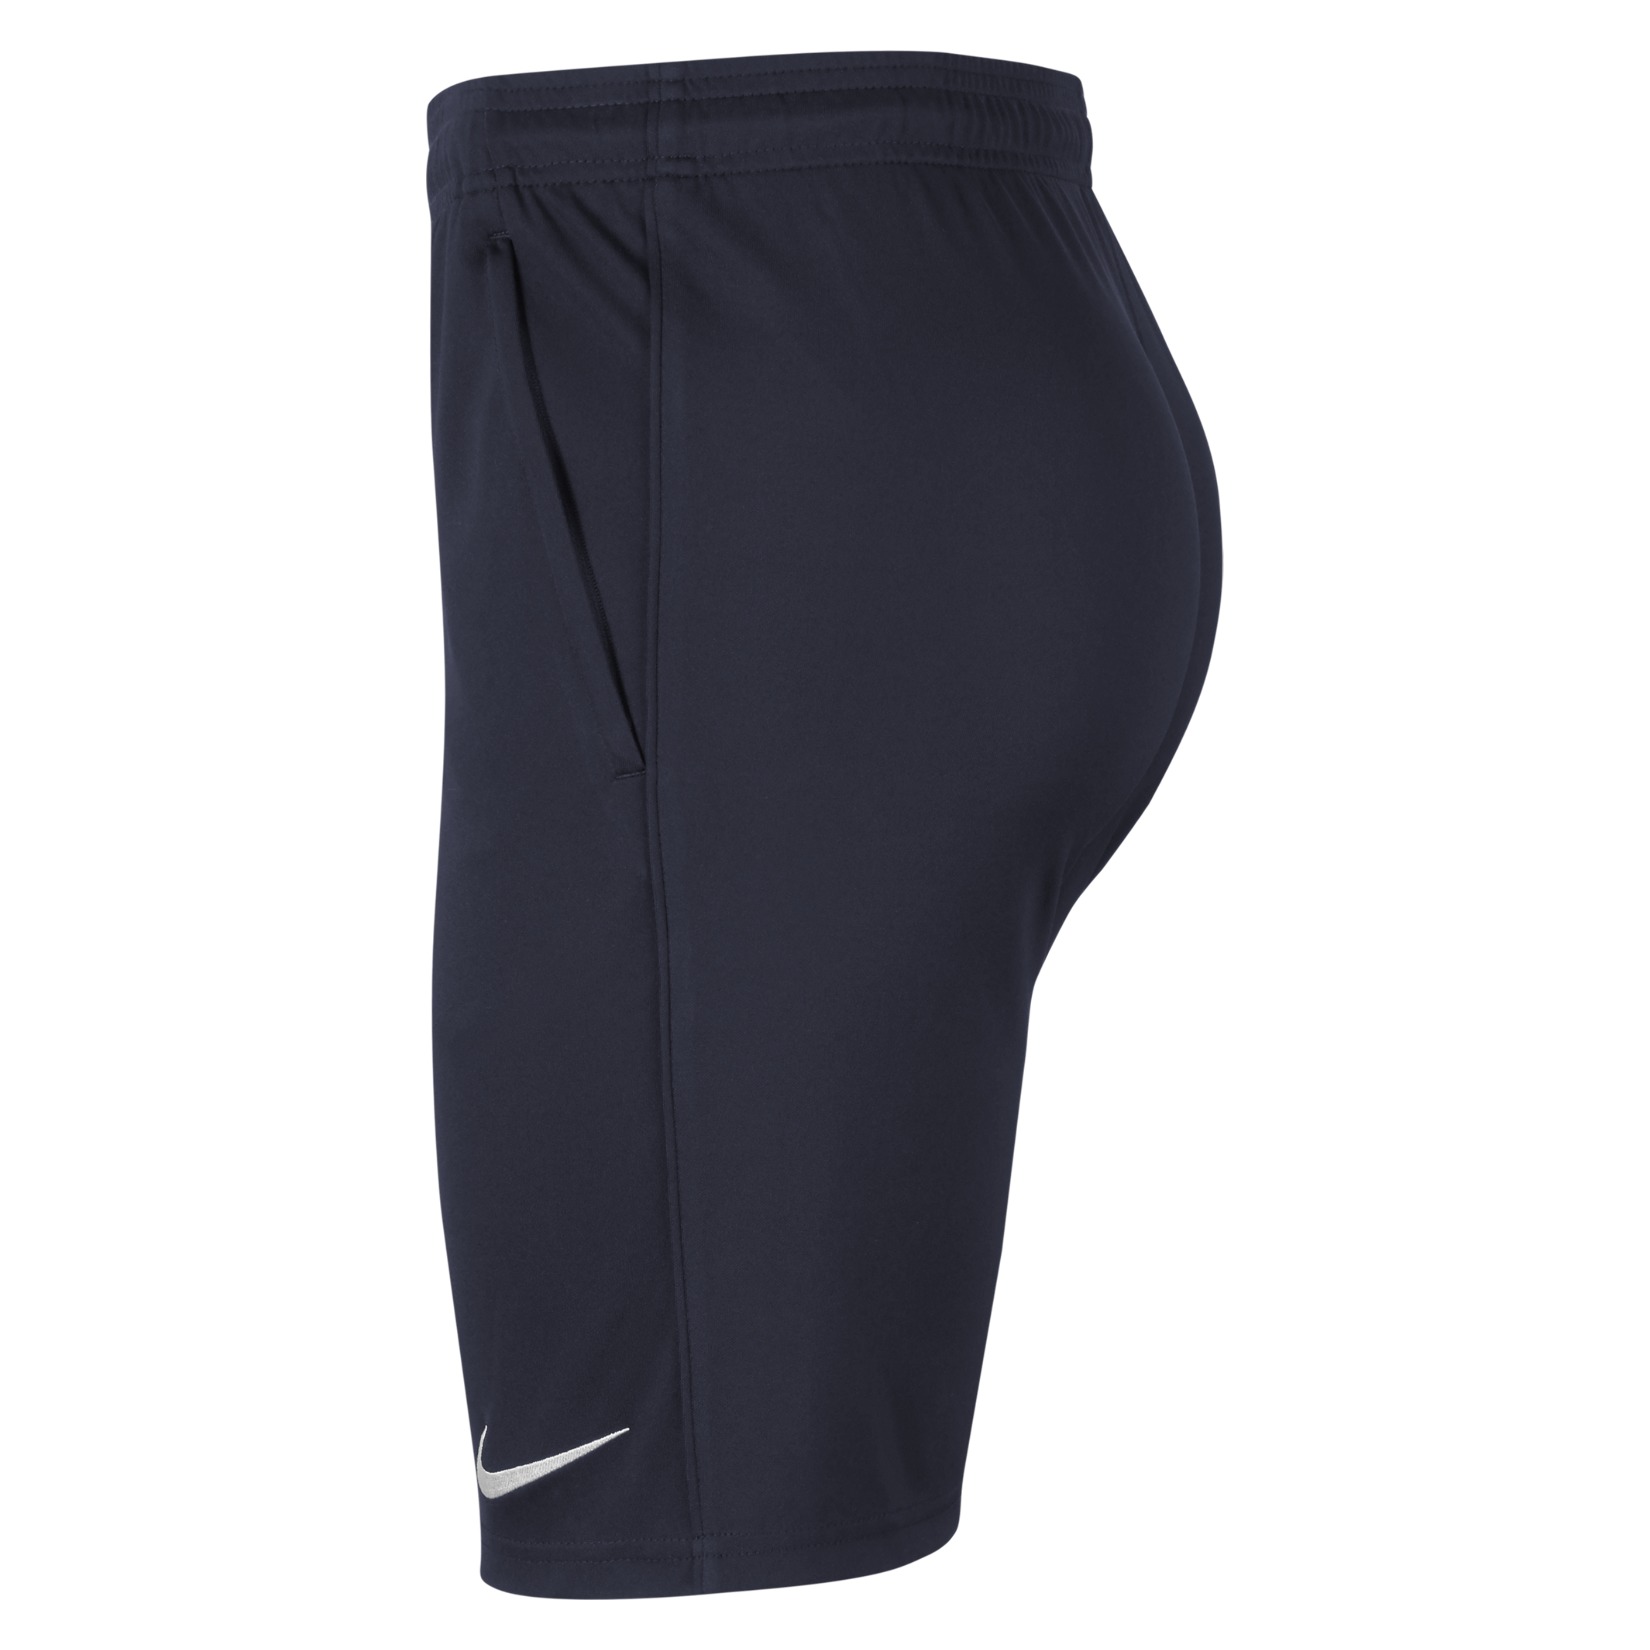 Nike Park 20 Pocketed Shorts (M) Obsidian-Obsidian-White